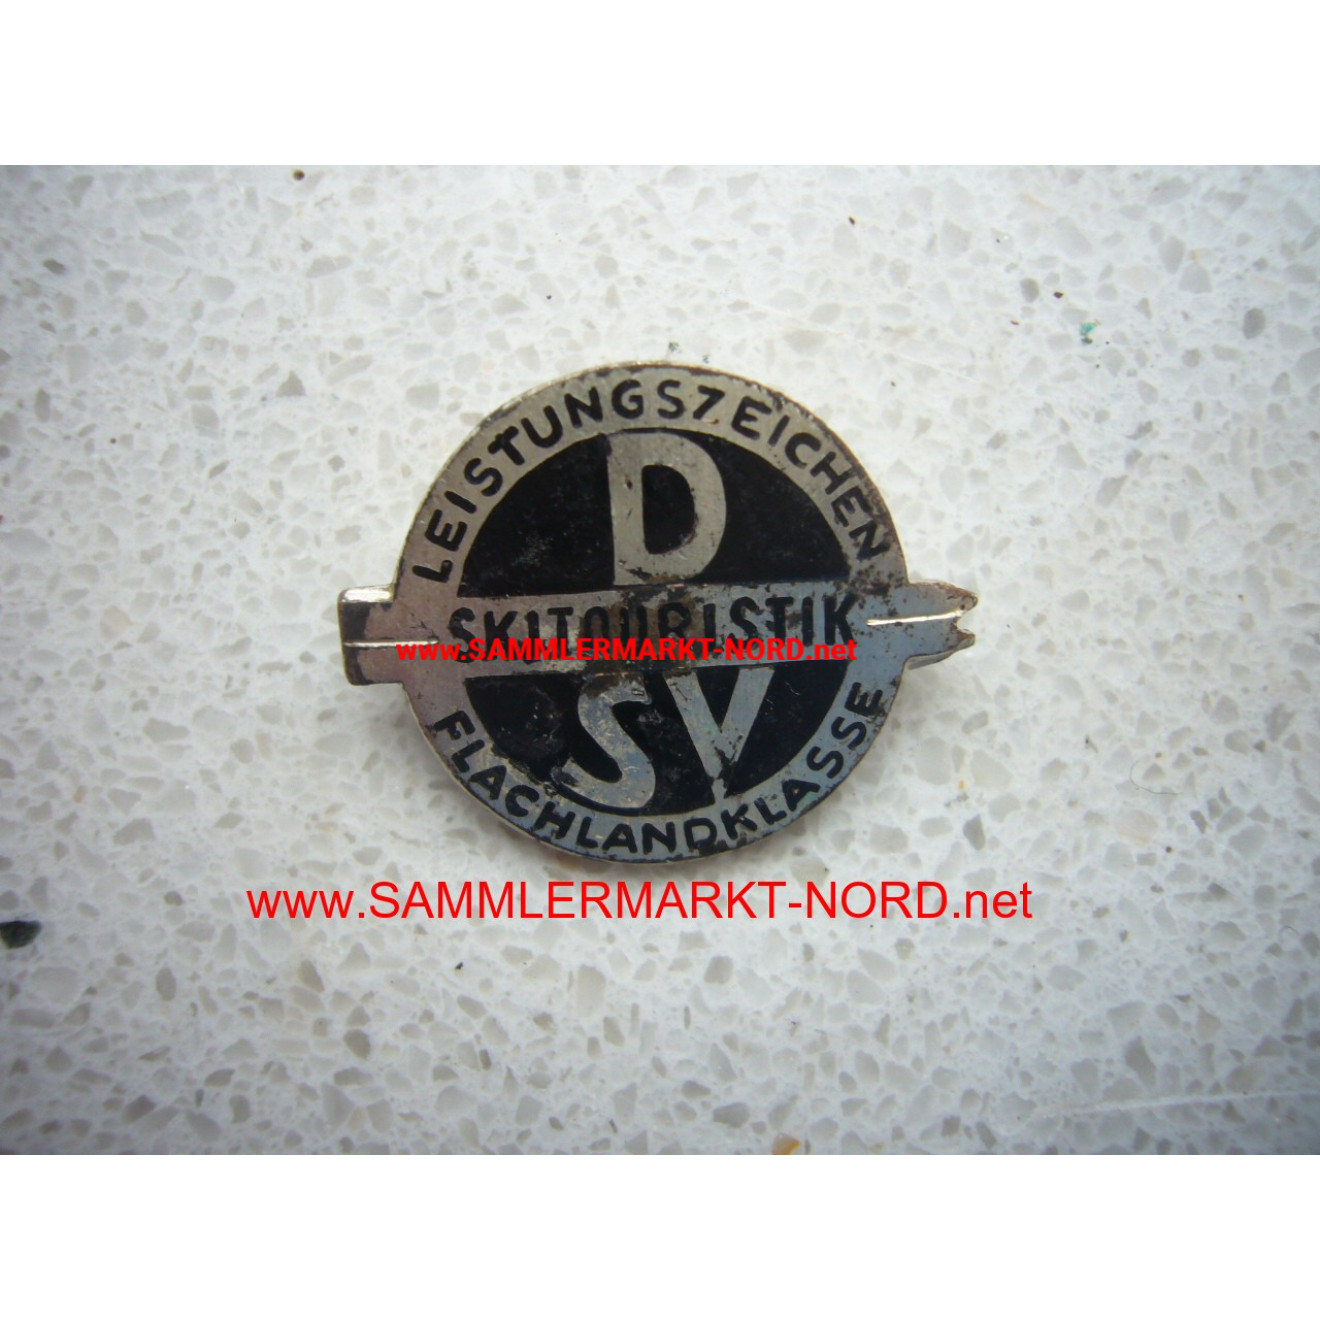 German Ski Federation (DSV) - Achievement badge lowland class